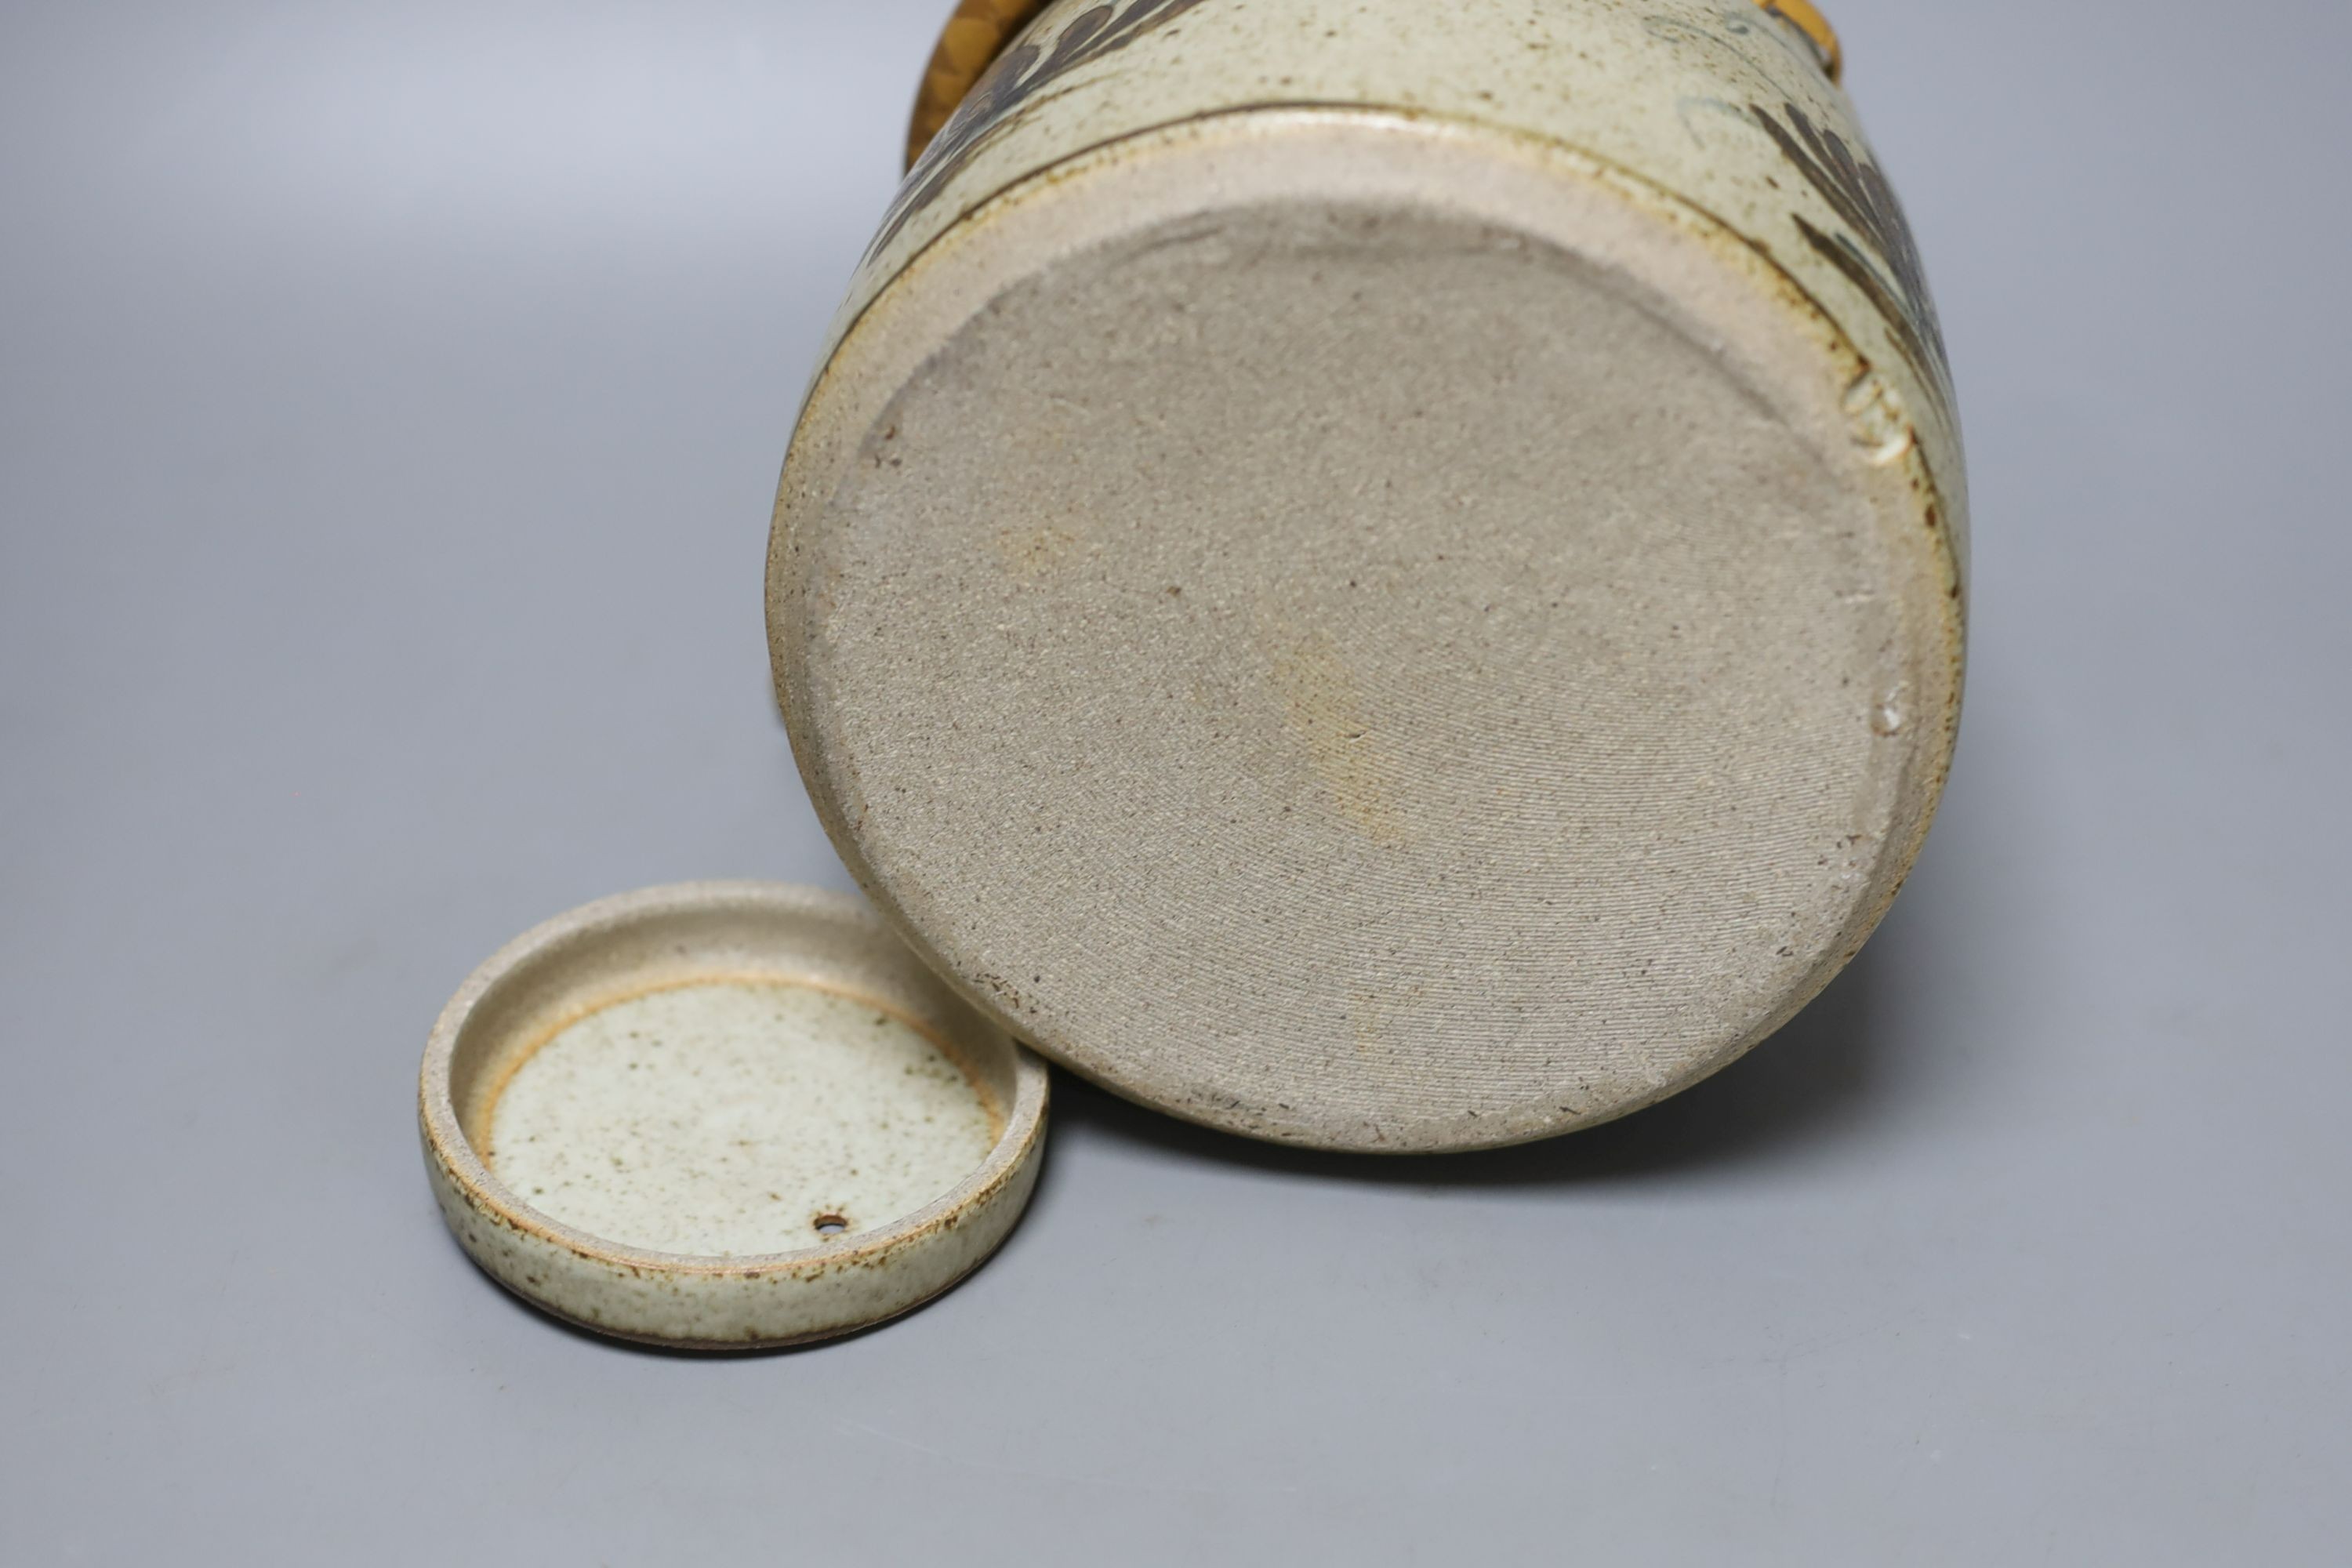 David Leach, studio pottery kettle, post 1956 - 16cm tall